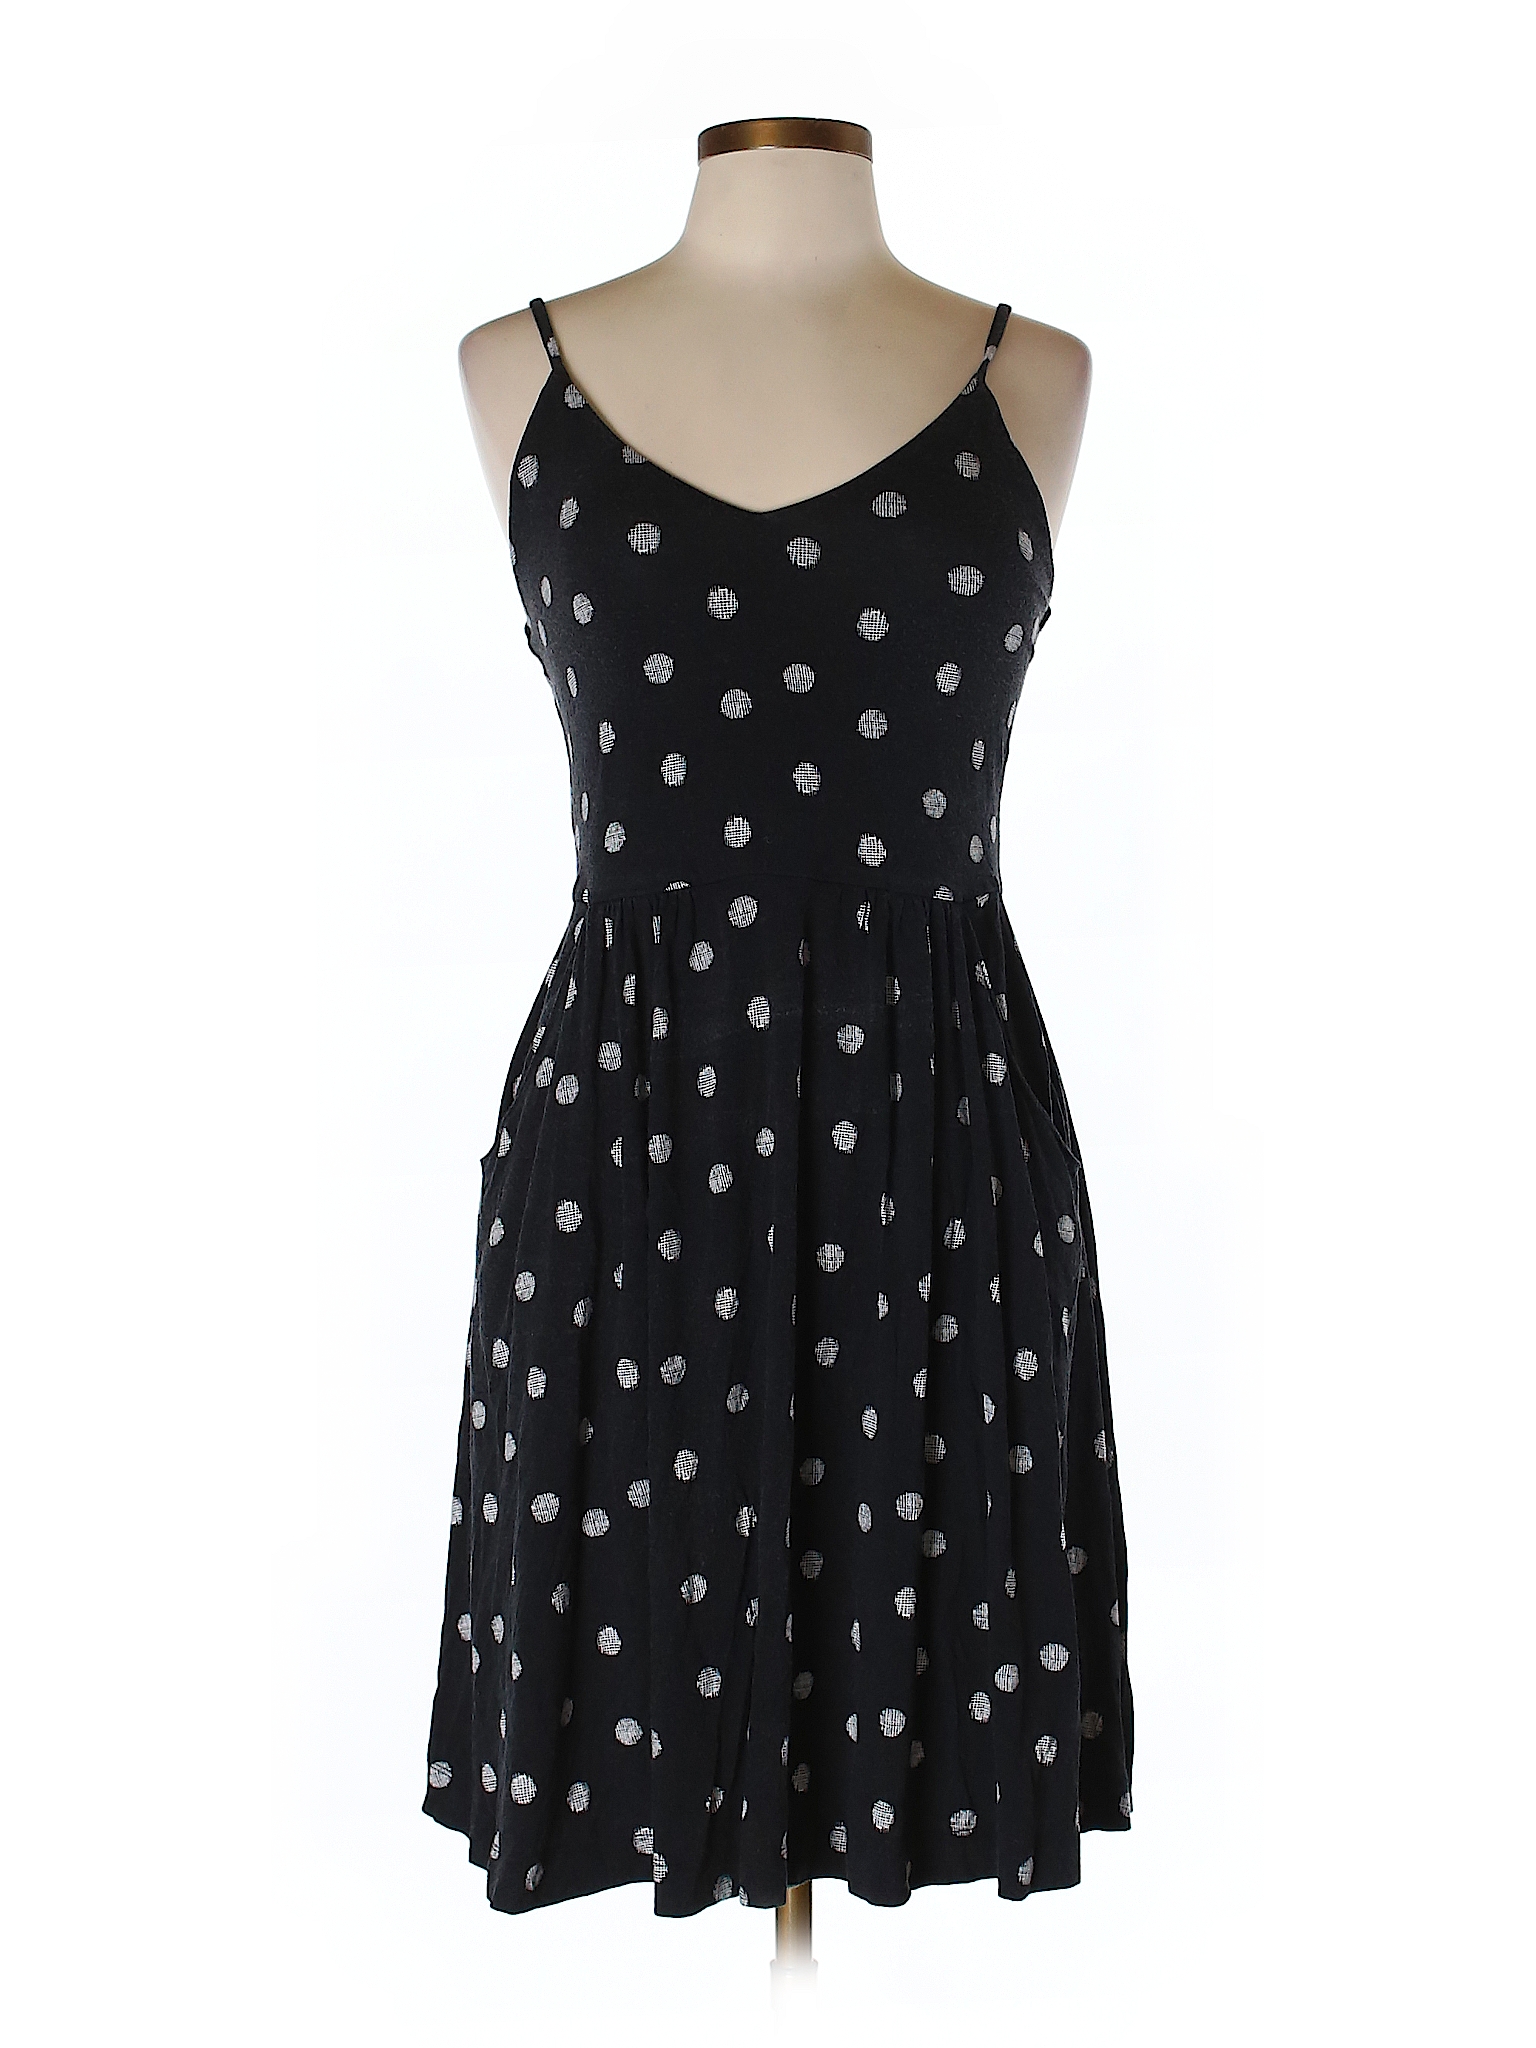 Cynthia Rowley TJX Polka Dots Black Casual Dress Size L - 68% off | thredUP